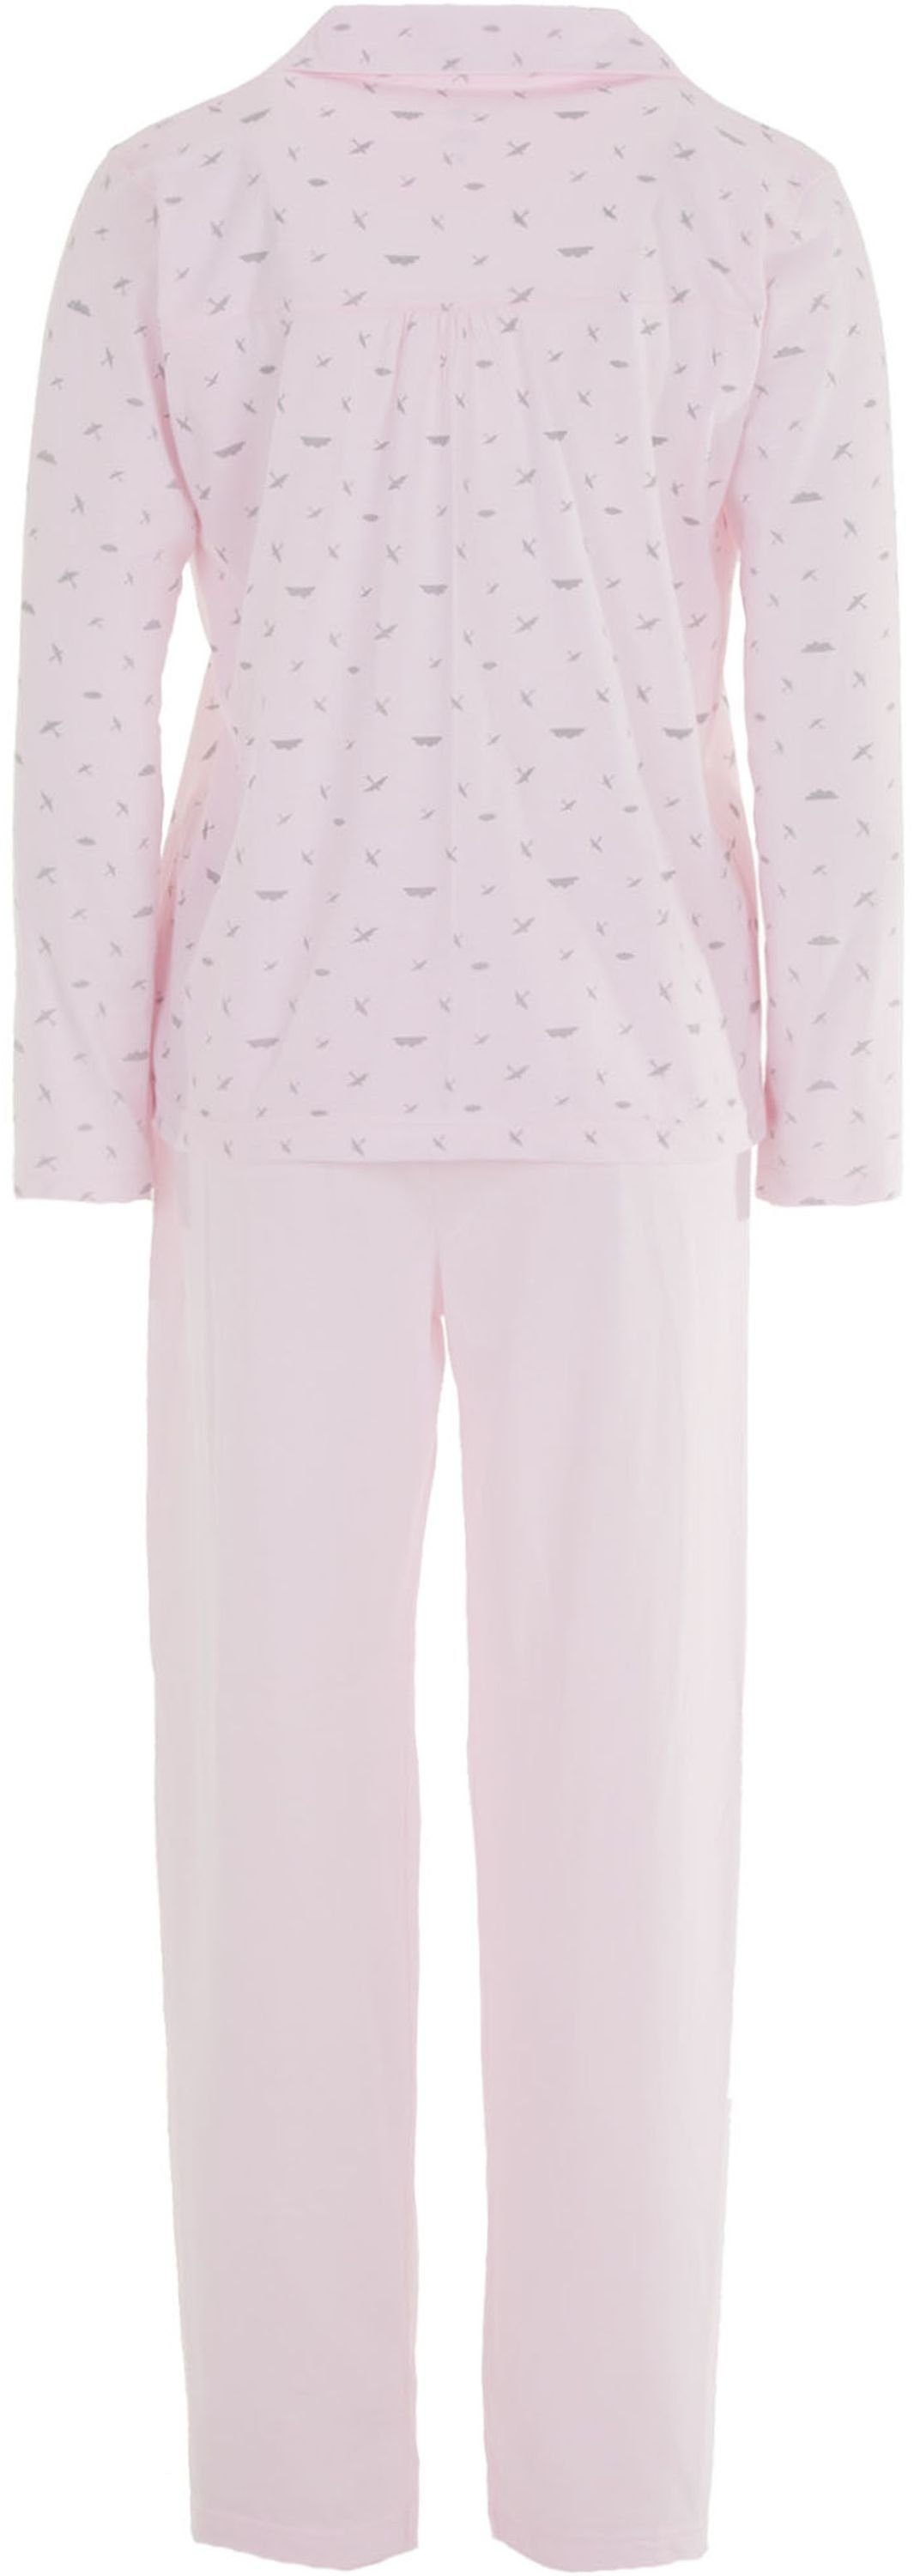 Schwalbe Set Langarm zeitlos Pyjama Schlafanzug - rosa